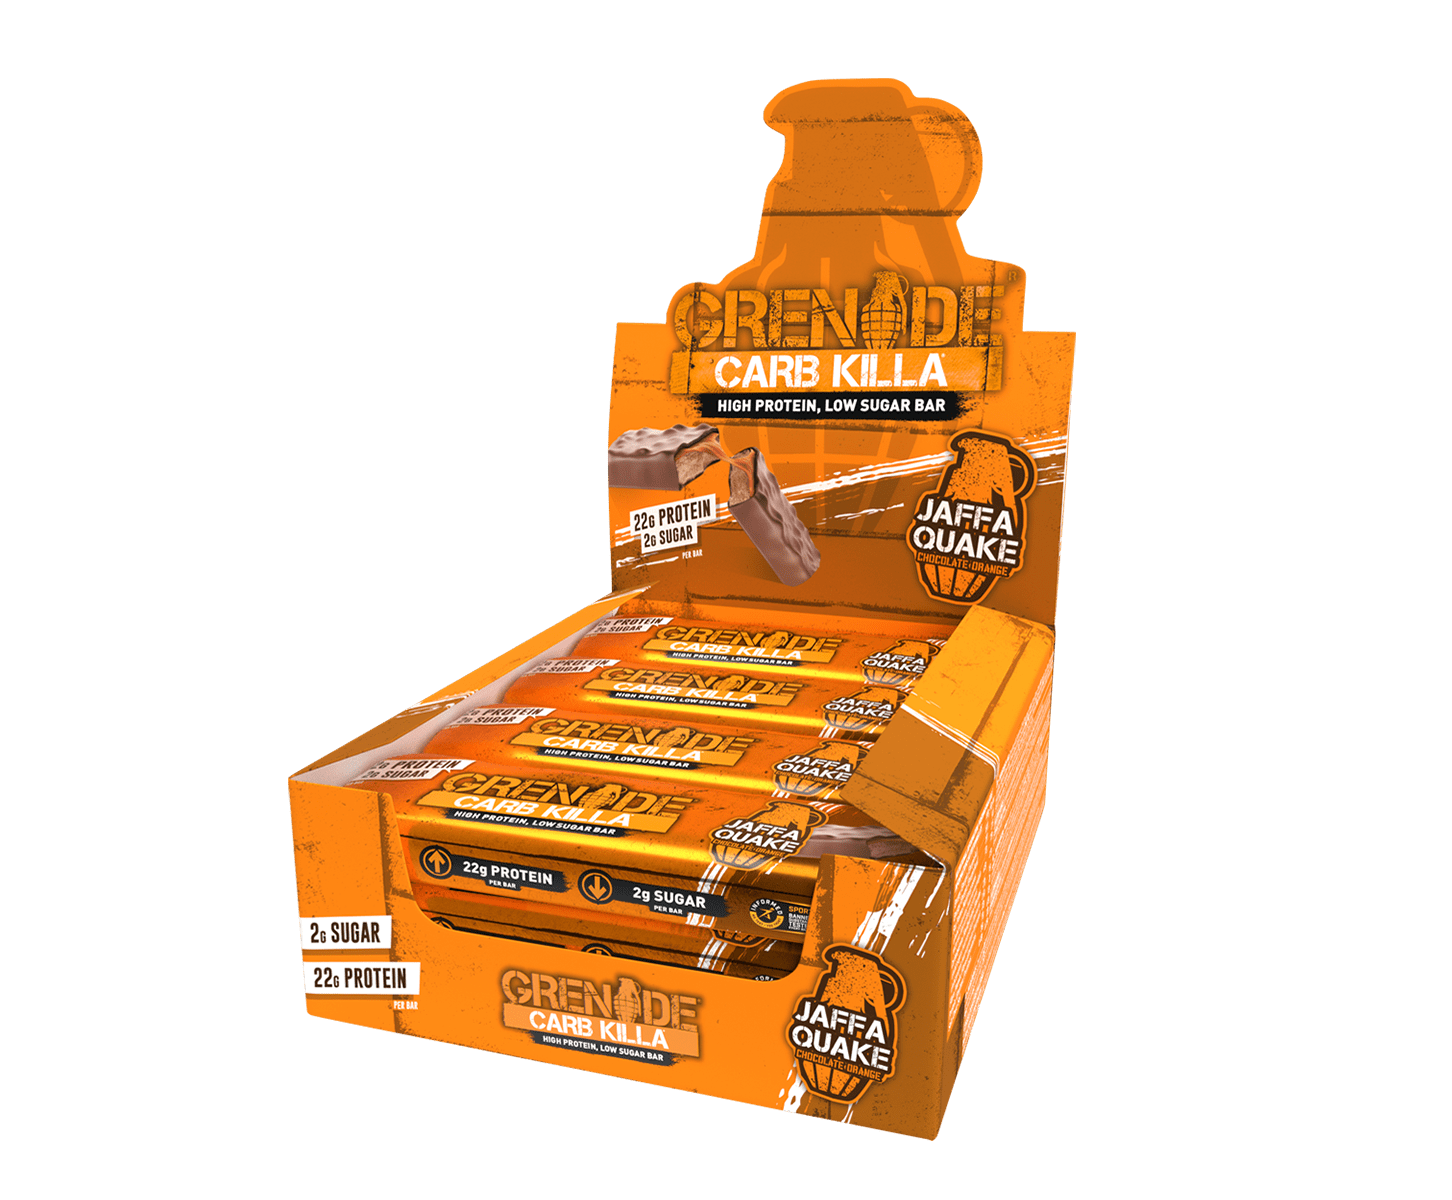 Grenade Protein Bars, 12/box | Best High Protein Bar Supplements